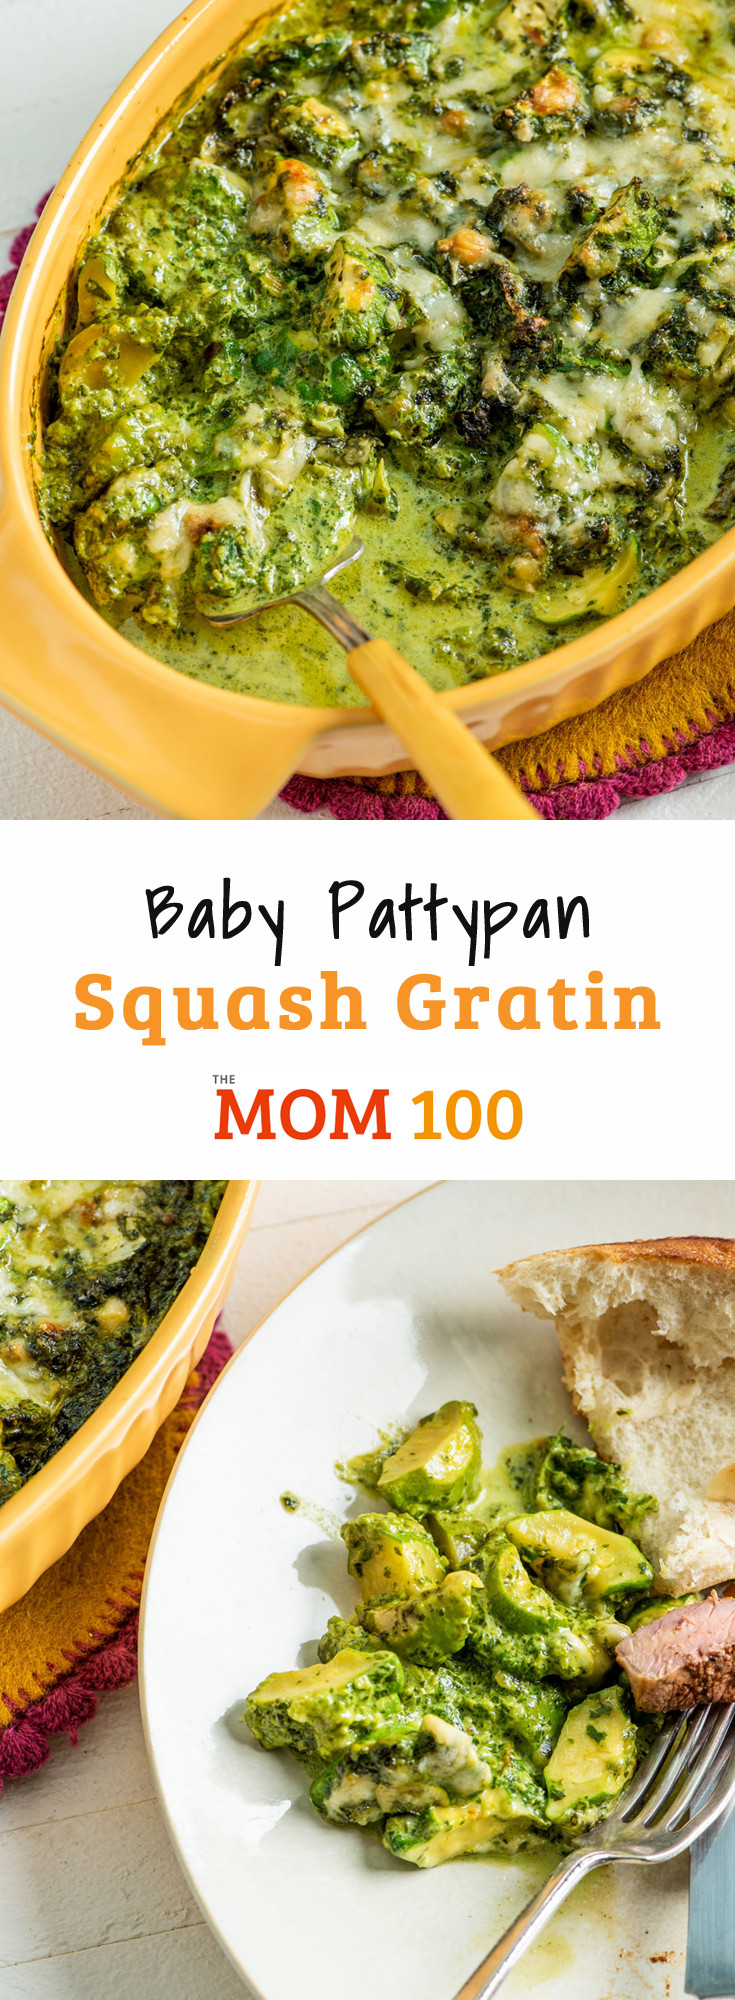 Baby Pattypan Squash Recipes
 Baby Pattypan Squash Gratin Recipe — The Mom 100